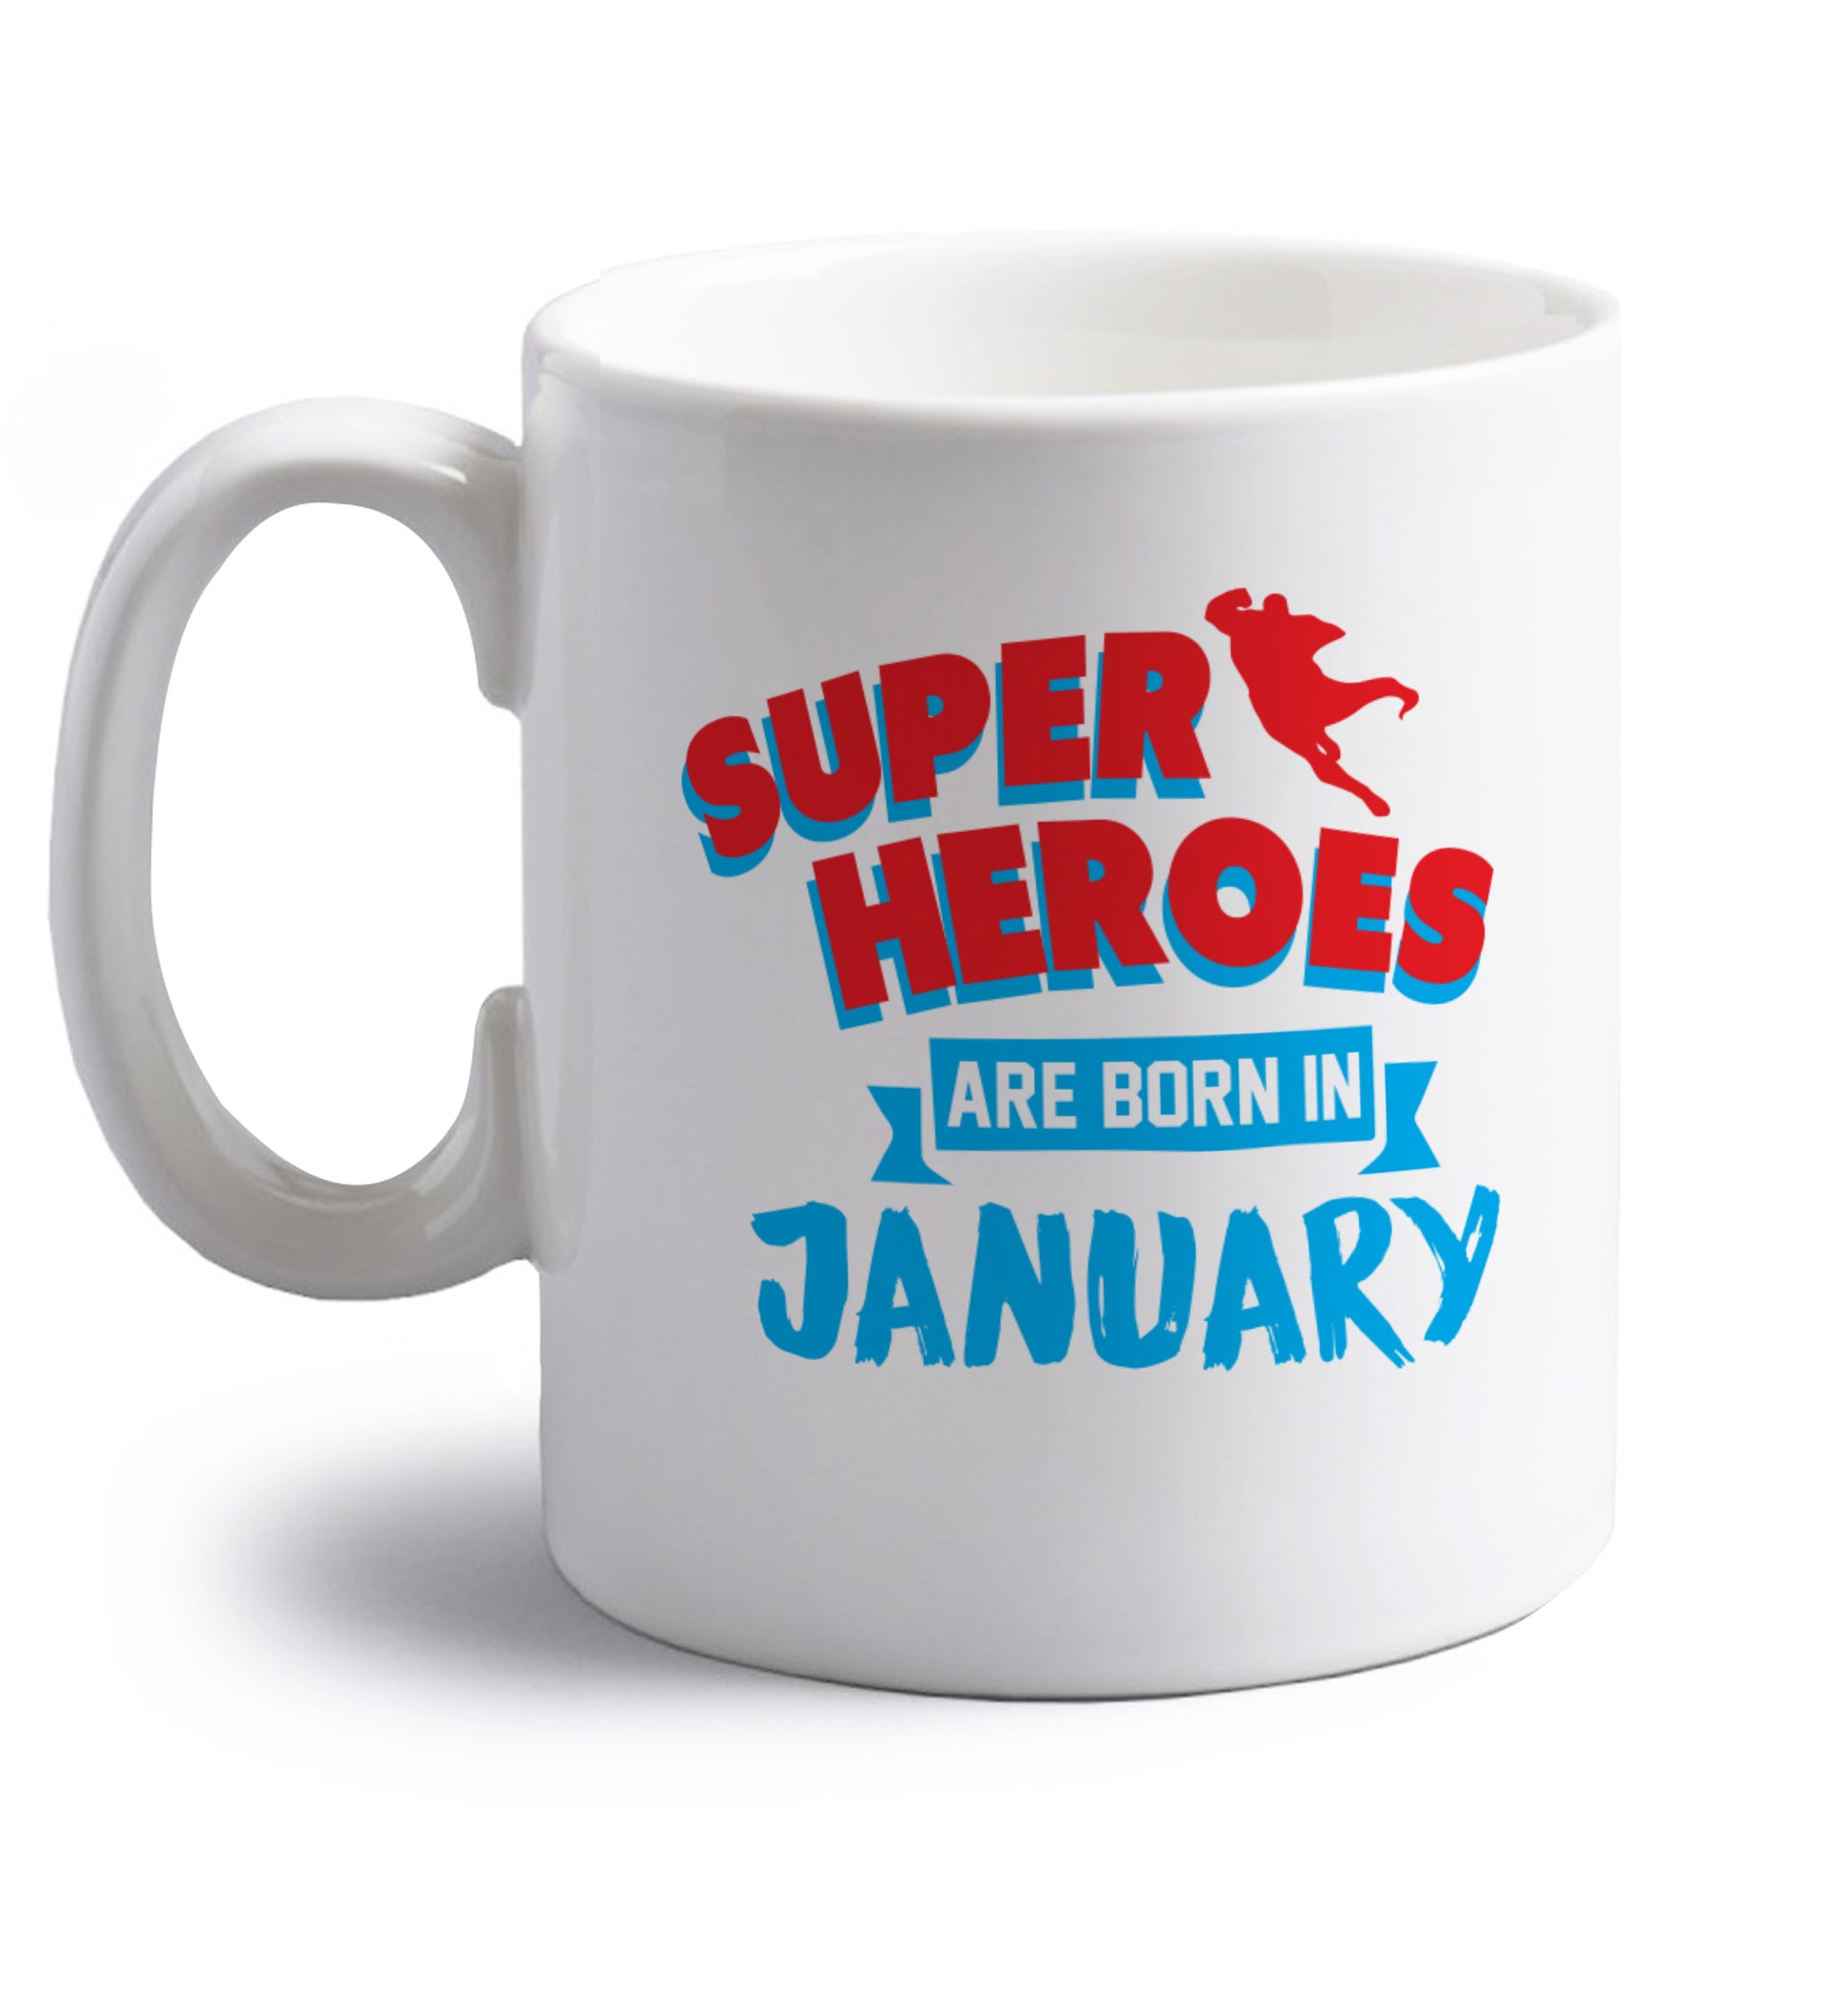 Superheros are born in January right handed white ceramic mug 